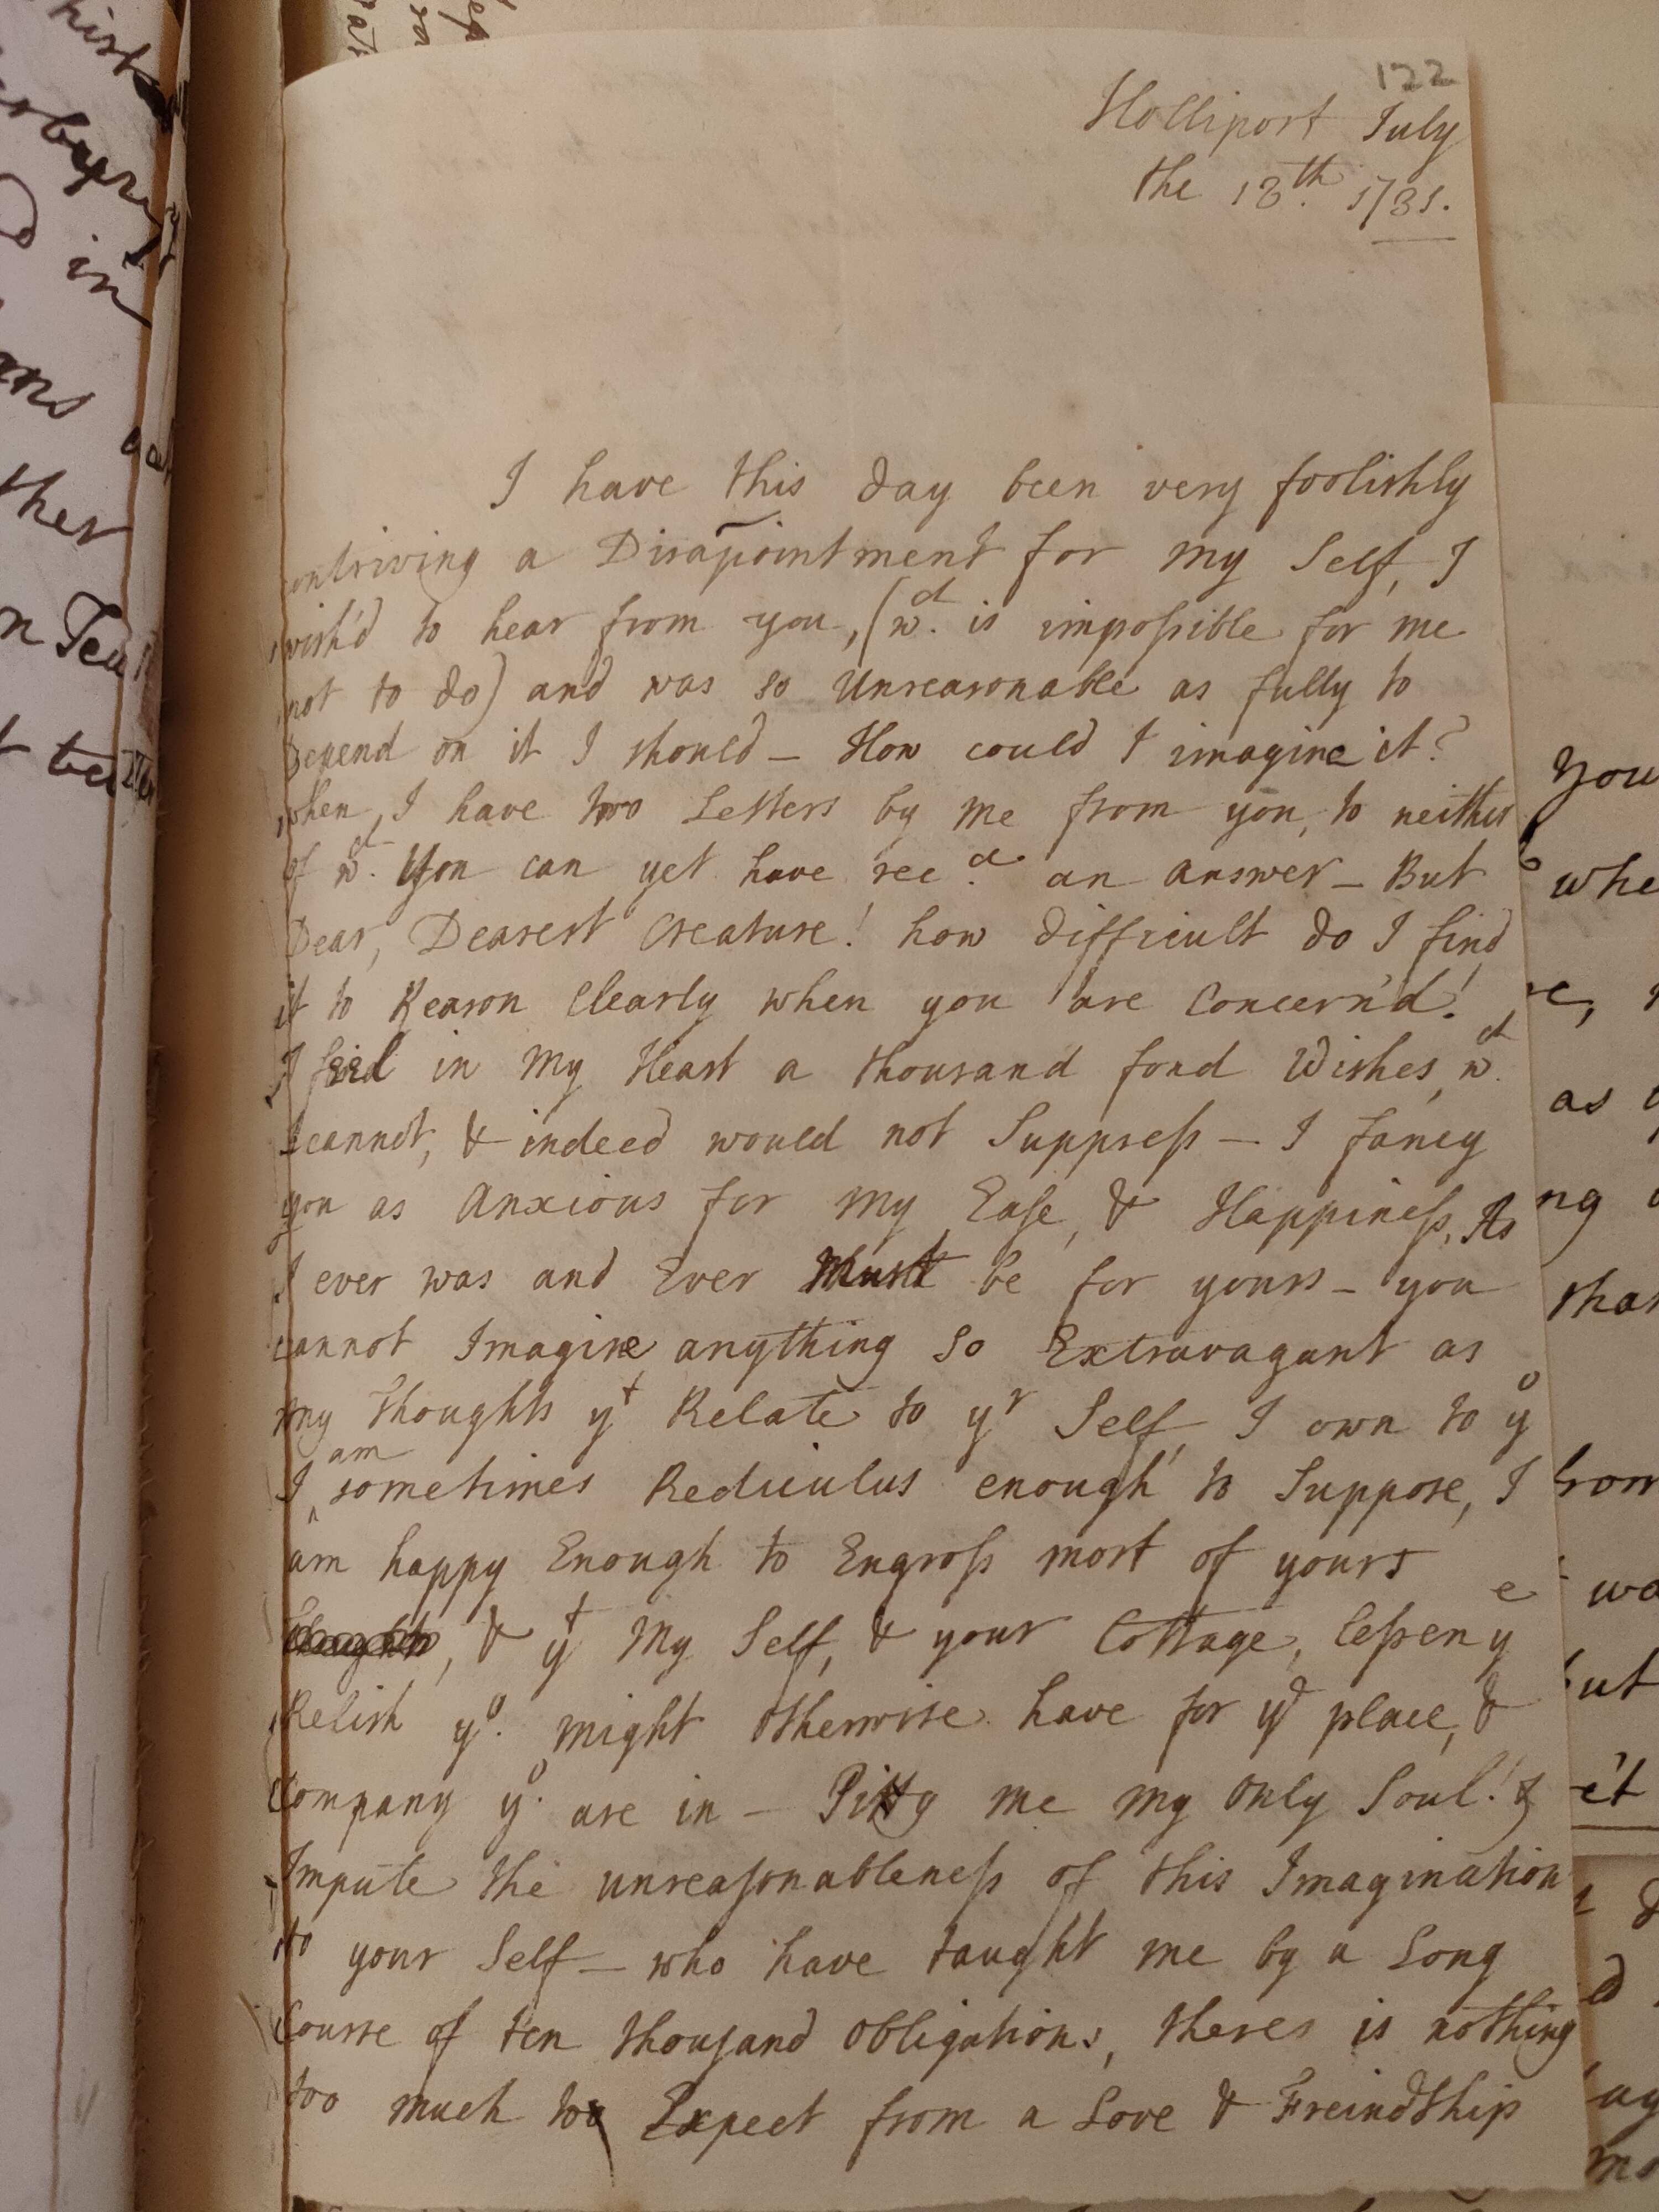 Image #1 of letter: Judith Madan to Martin Madan, 13 July 1731